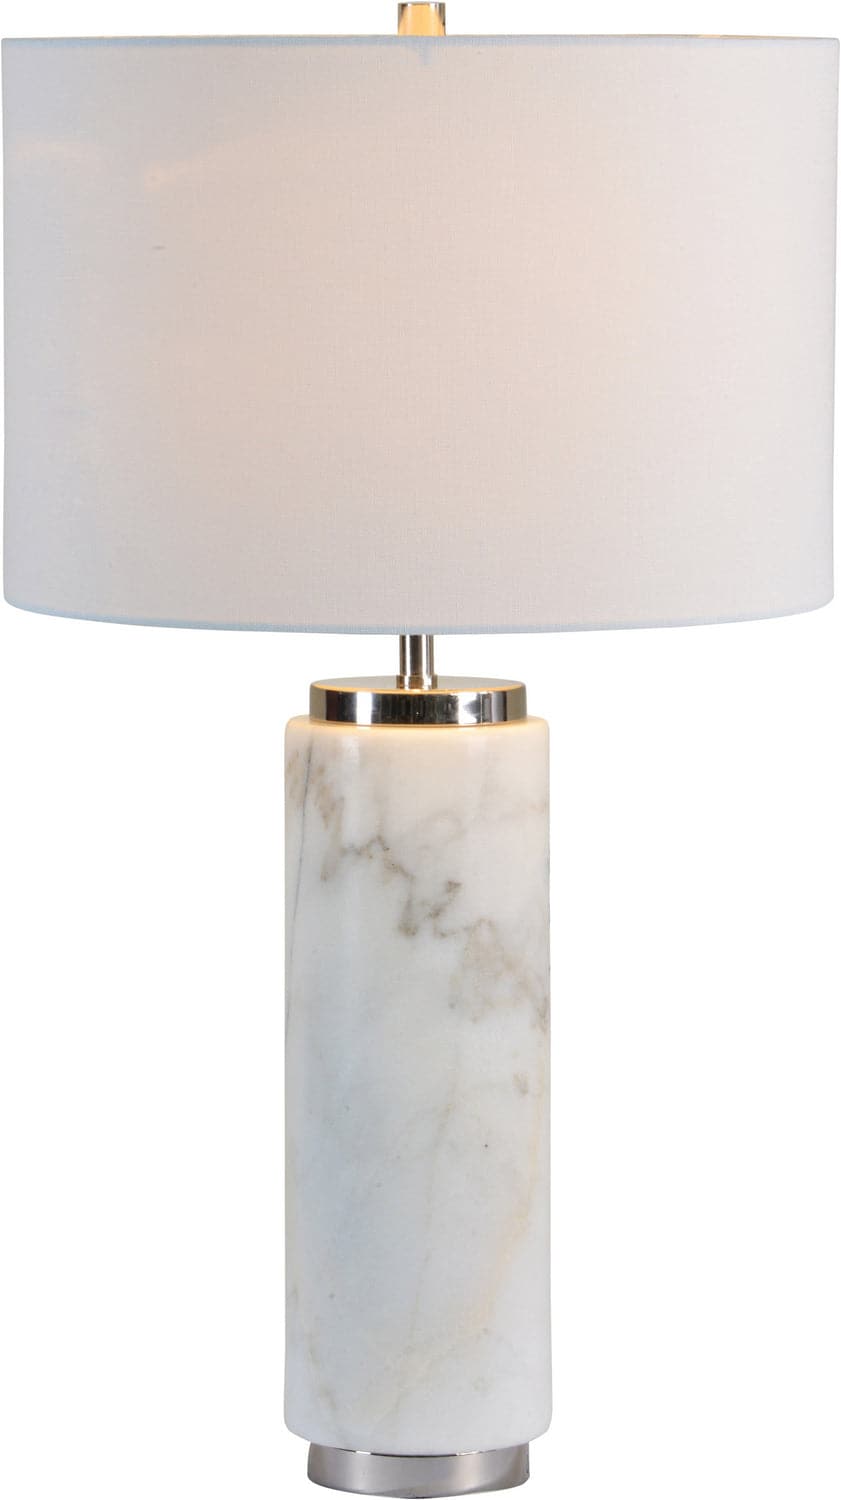 Renwil - LPT869 - One Light Table Lamp - Heathcroft - Natural